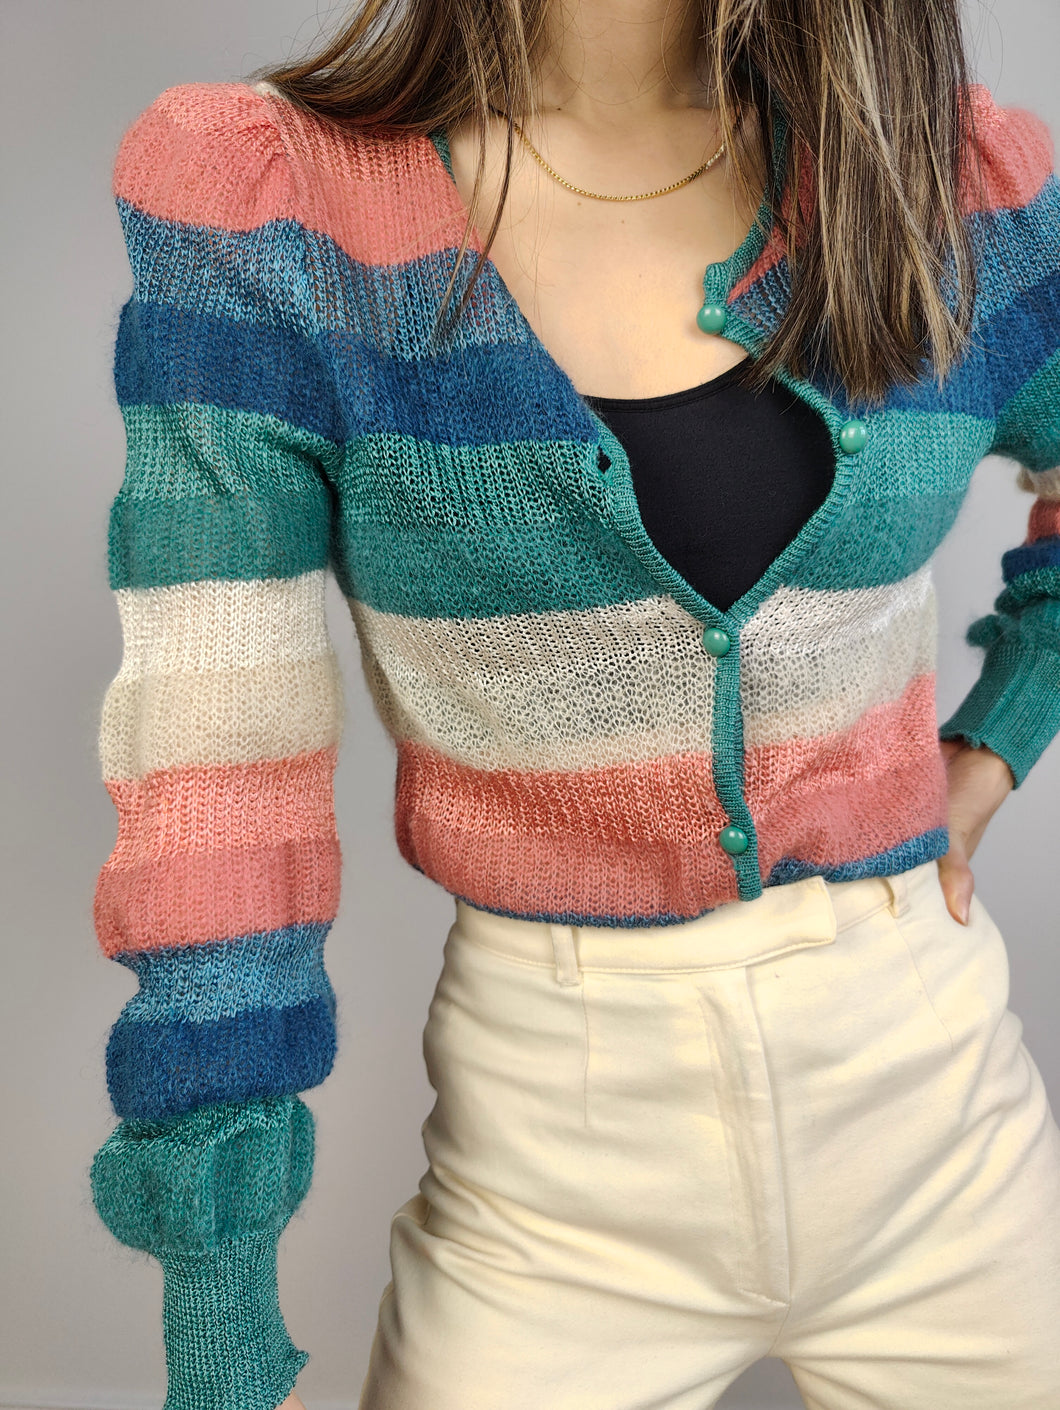 The Wool Mix Rainbow Knit Cardigan | Vintage knitted sweater jacket pastel blue pink green white stripe pattern crochet light spring summer women XS